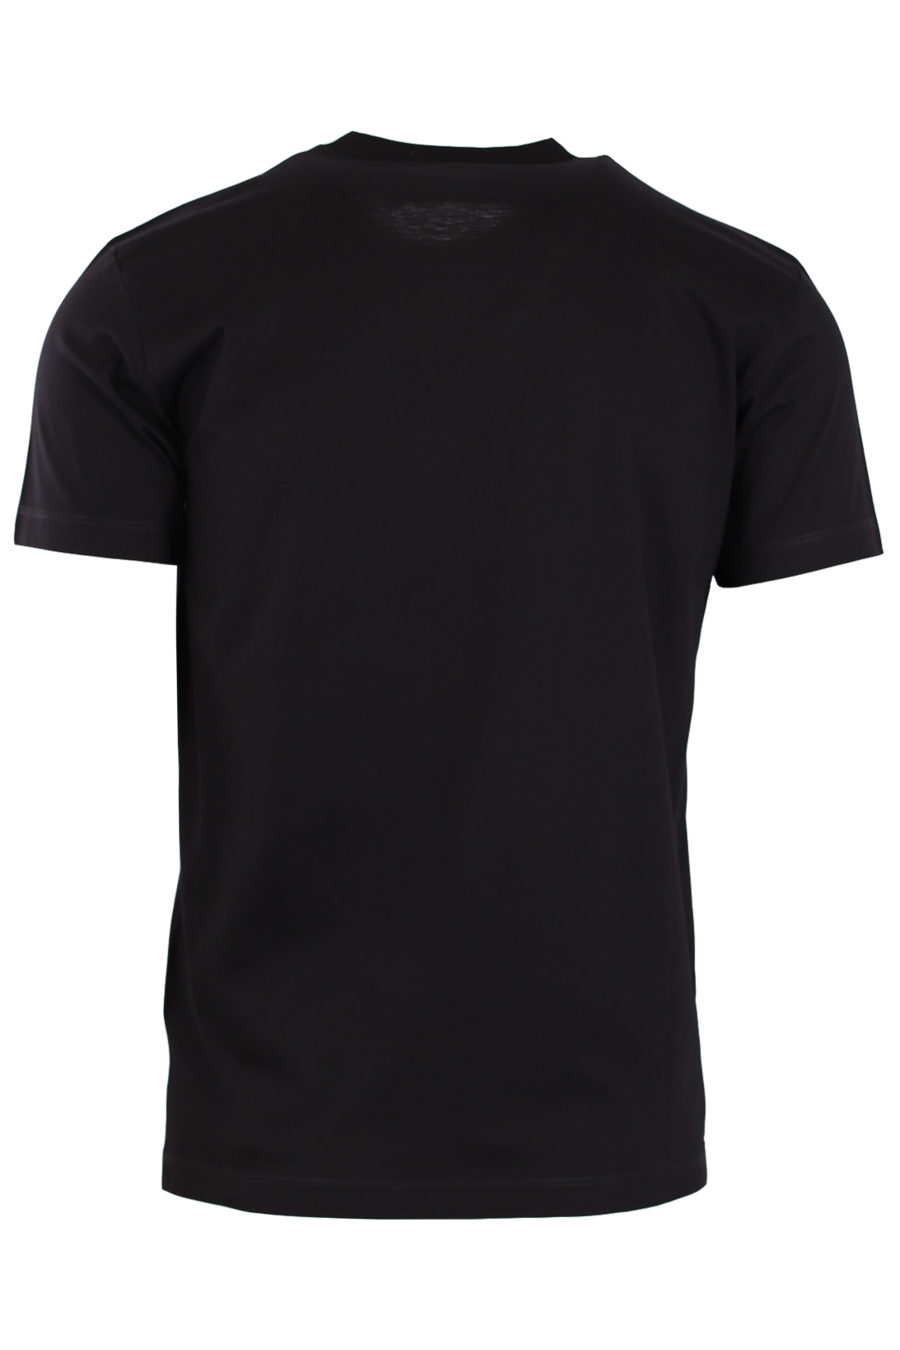 Camiseta negra con logotipo "Icon" tachado - e29270a4f4bcee11883103bff3d18b11f78cf5bd